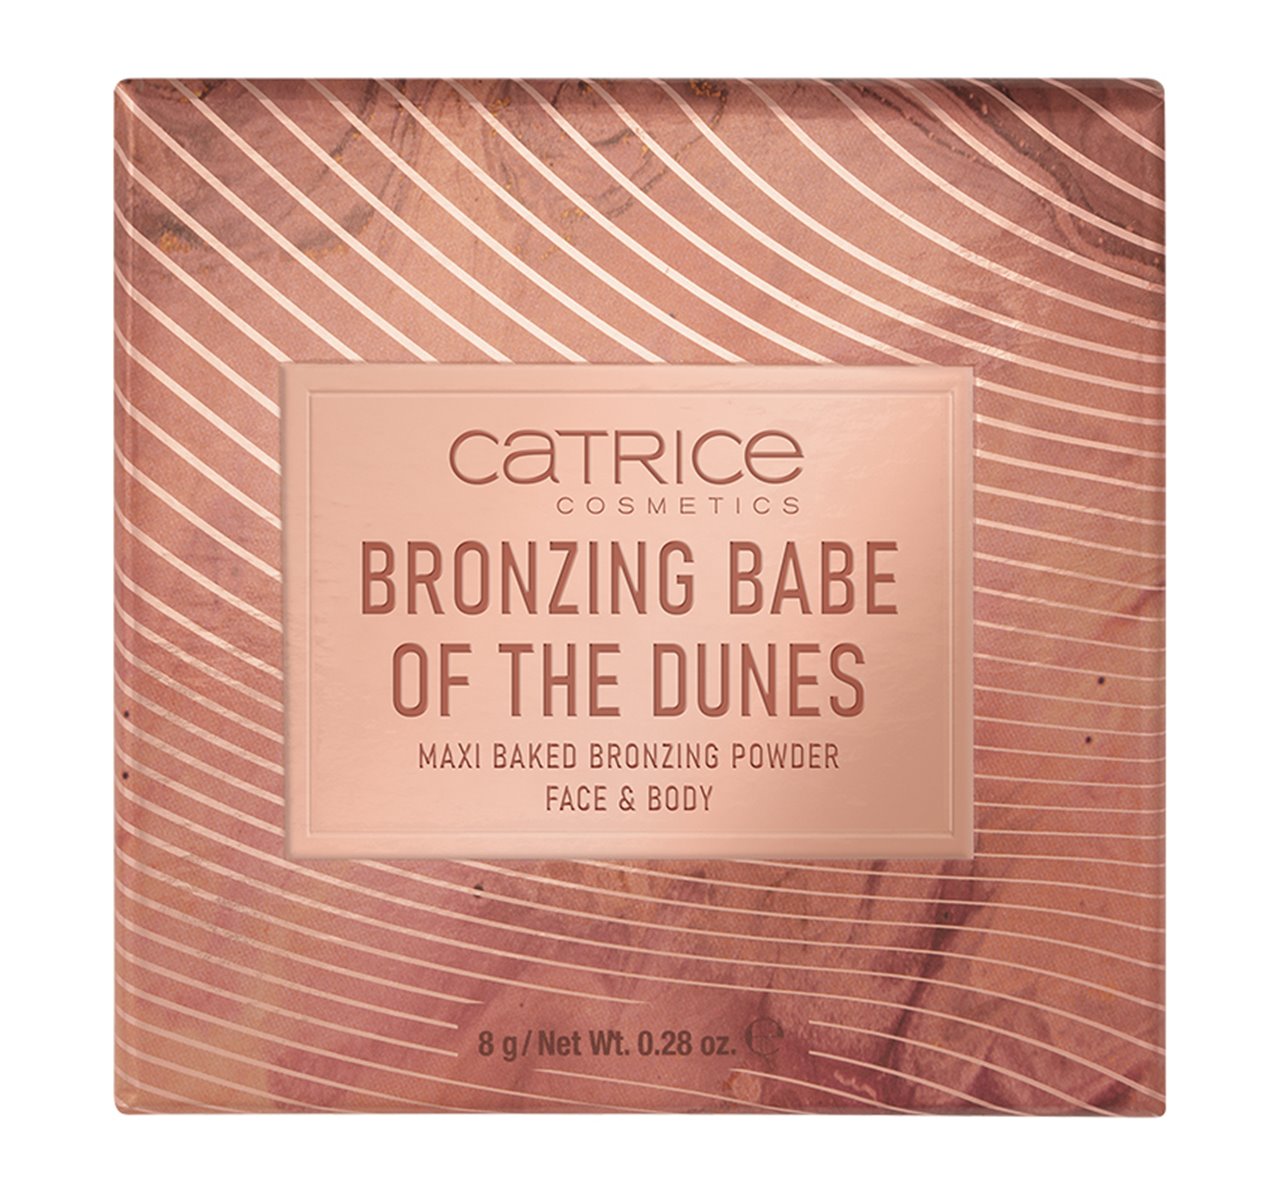 Bronzing Bronzing Babe Catrice Of Maxi The Baked Powder-Face Dunes